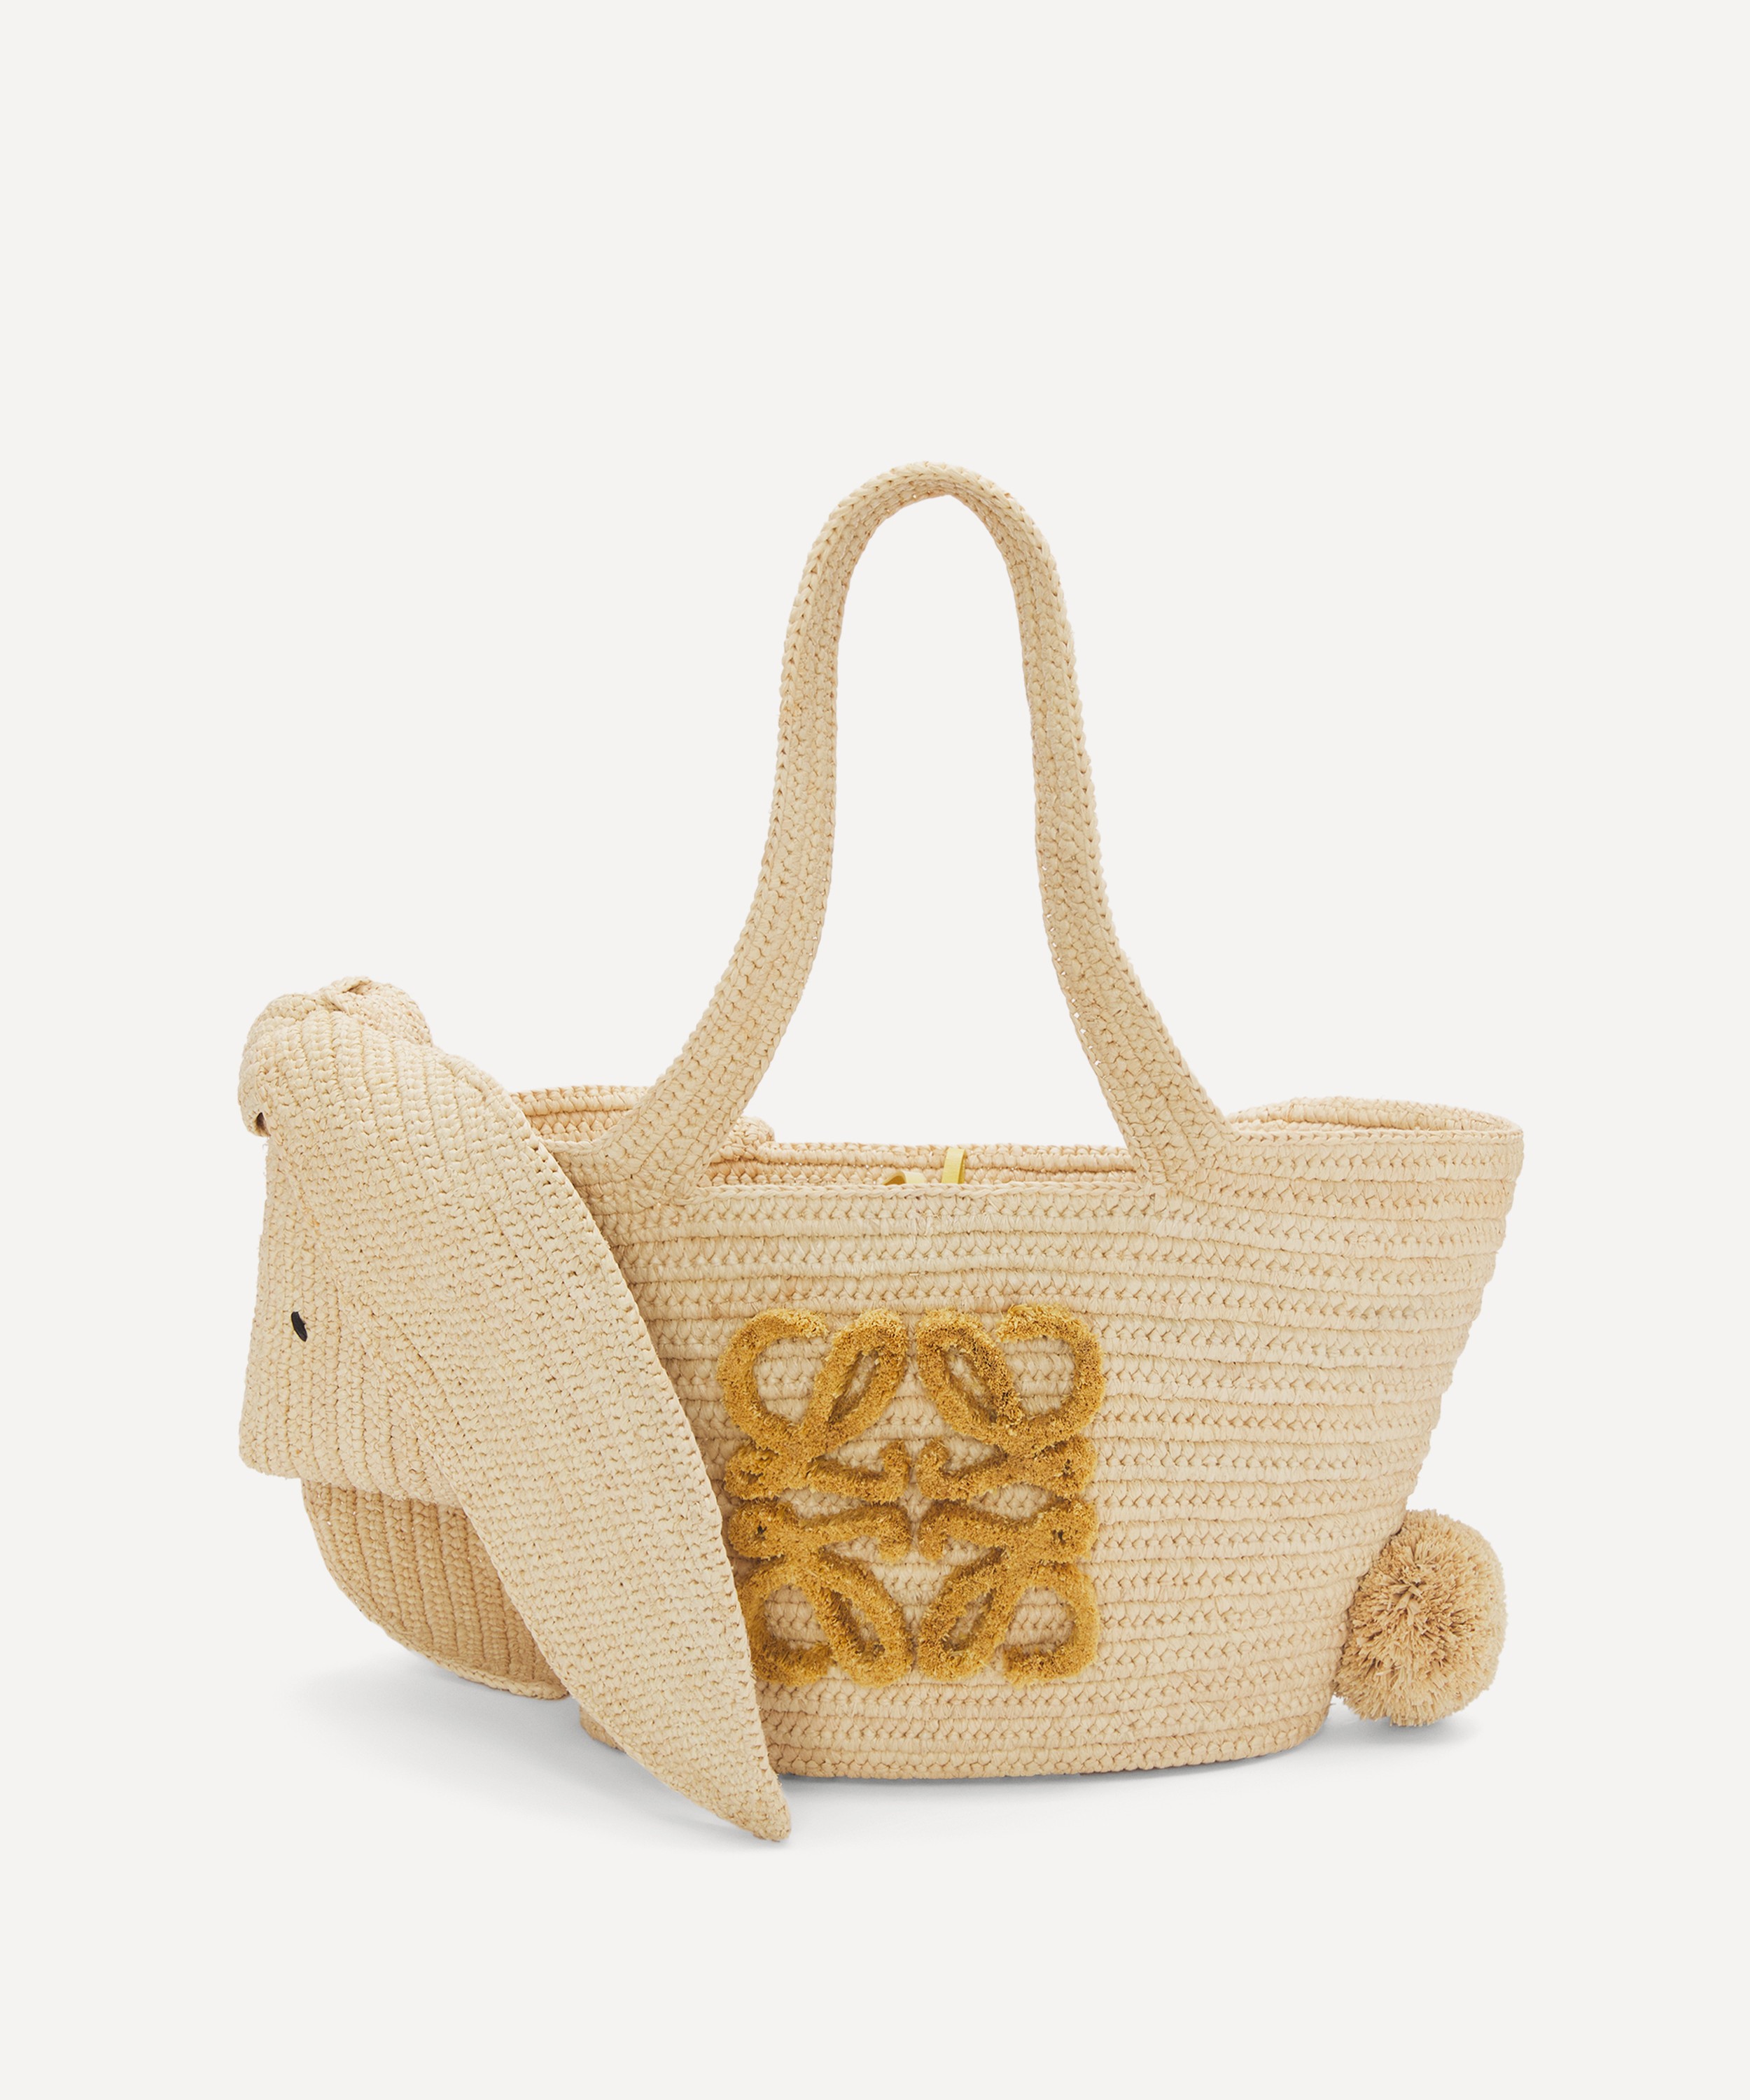 Loewe Small Basket Bag, White